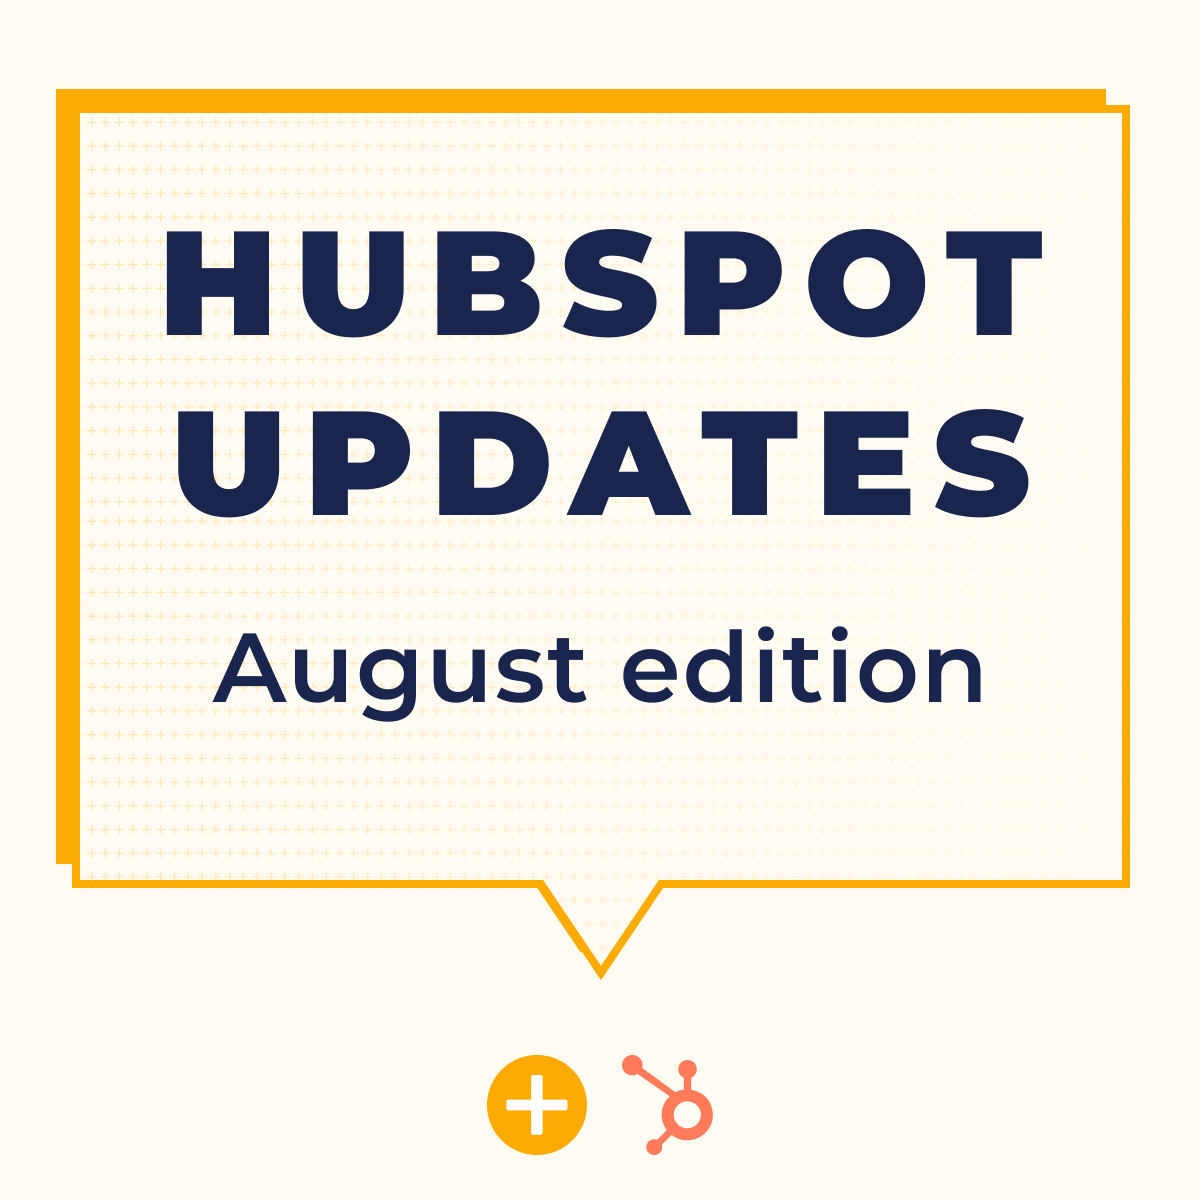 HUBSPOT UPDATES August edition